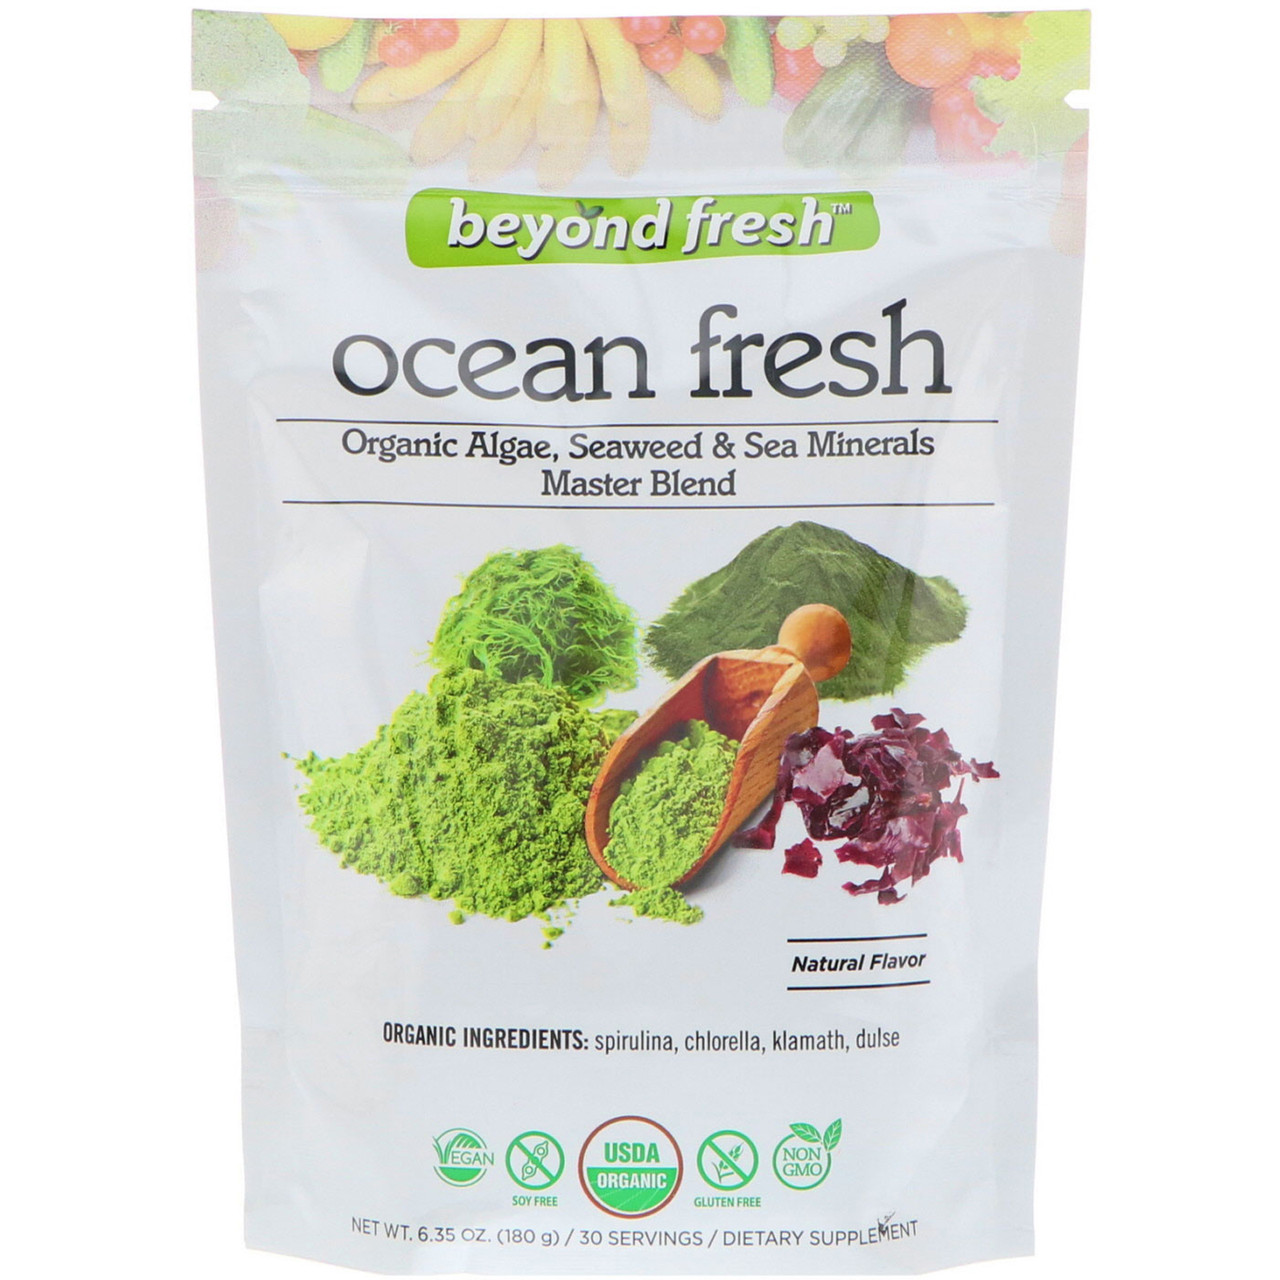 Beyond Fresh, Ocean Fresh, Organic Algae, Seaweed & Sea Minerals Master Blend, Natural Flavor, 6.35 oz (180 g)